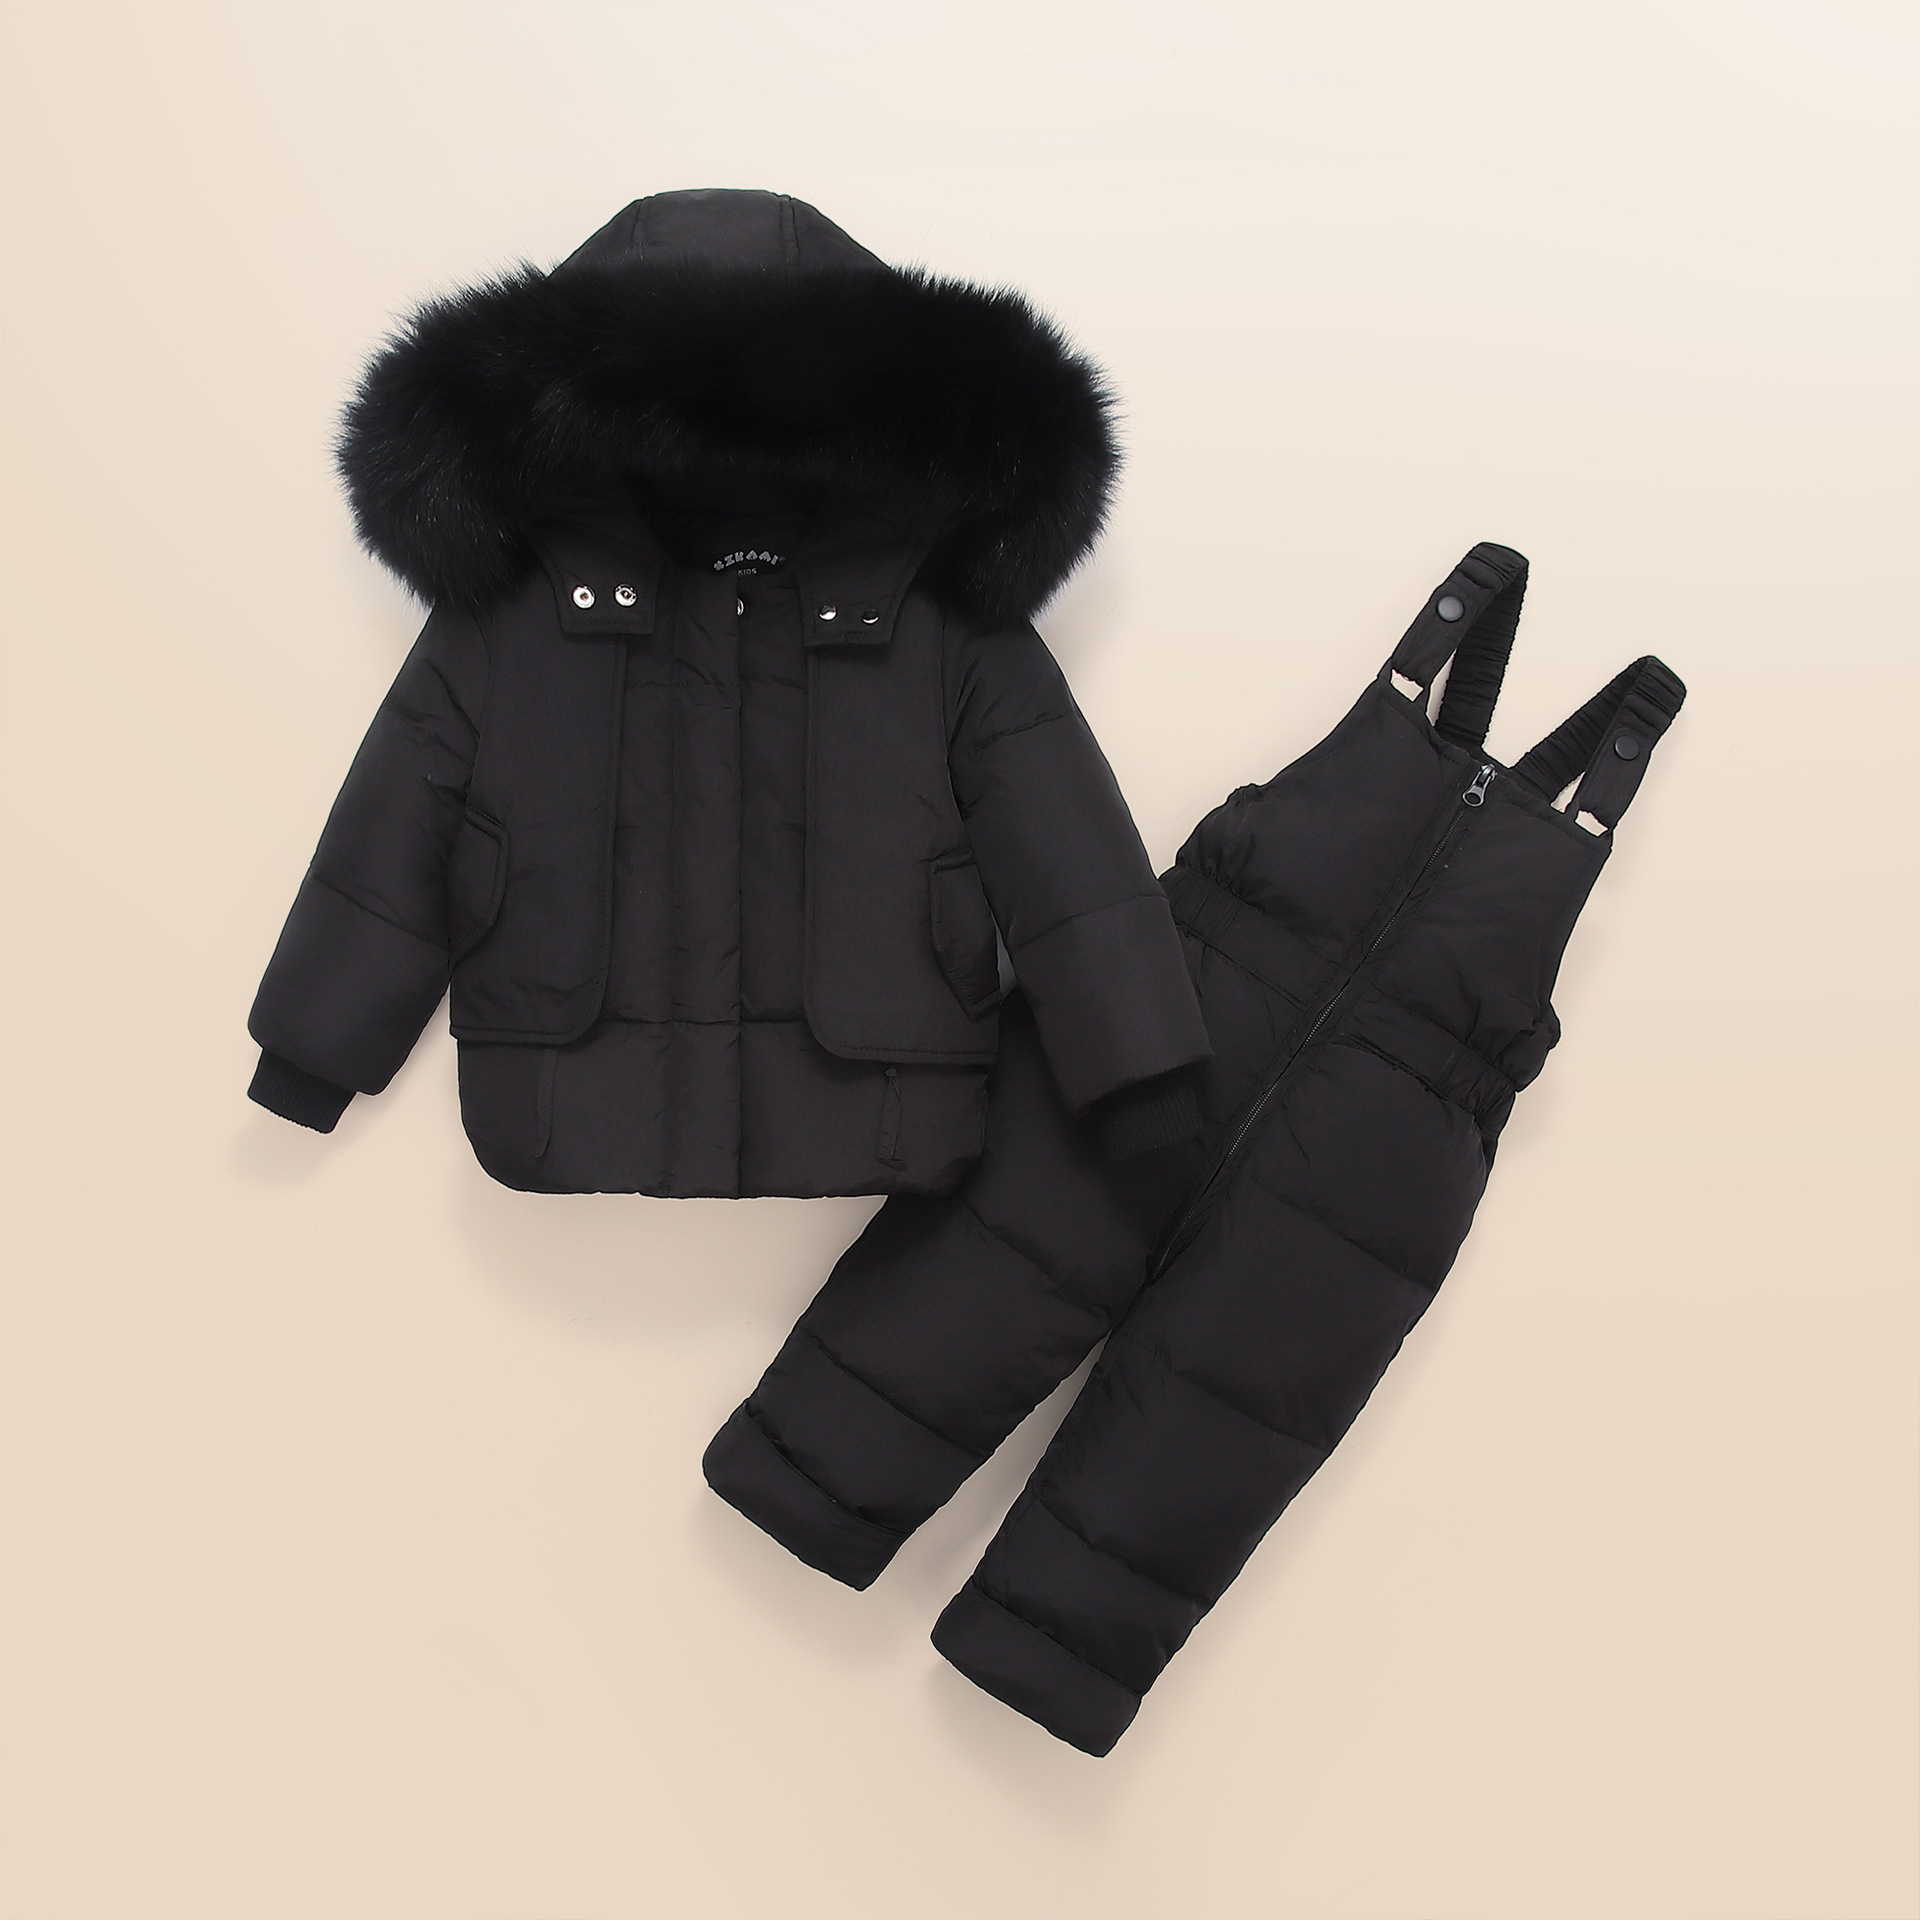 ULKNN Winter Children Clothing Sets Kids Down Coat Jacket Hooded Parkas+Bib Pants Jumpsuit Boy Fur Snowsuits Baby Girl